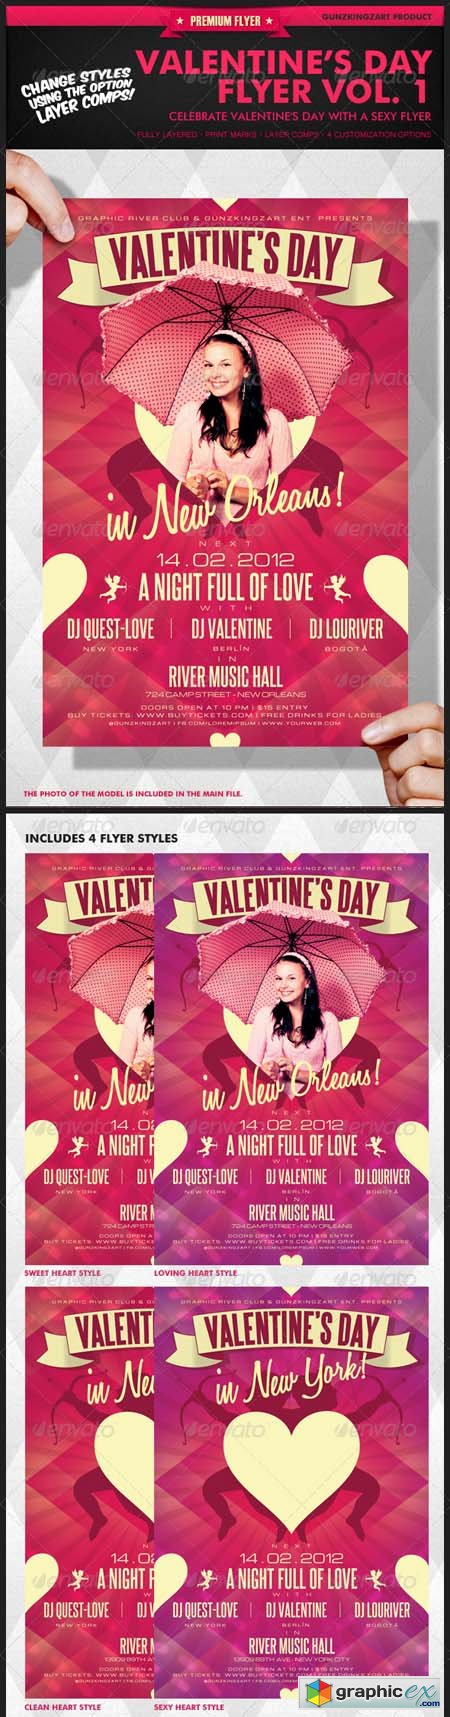 Valentine s Day Flyer Vol. 1 1474264